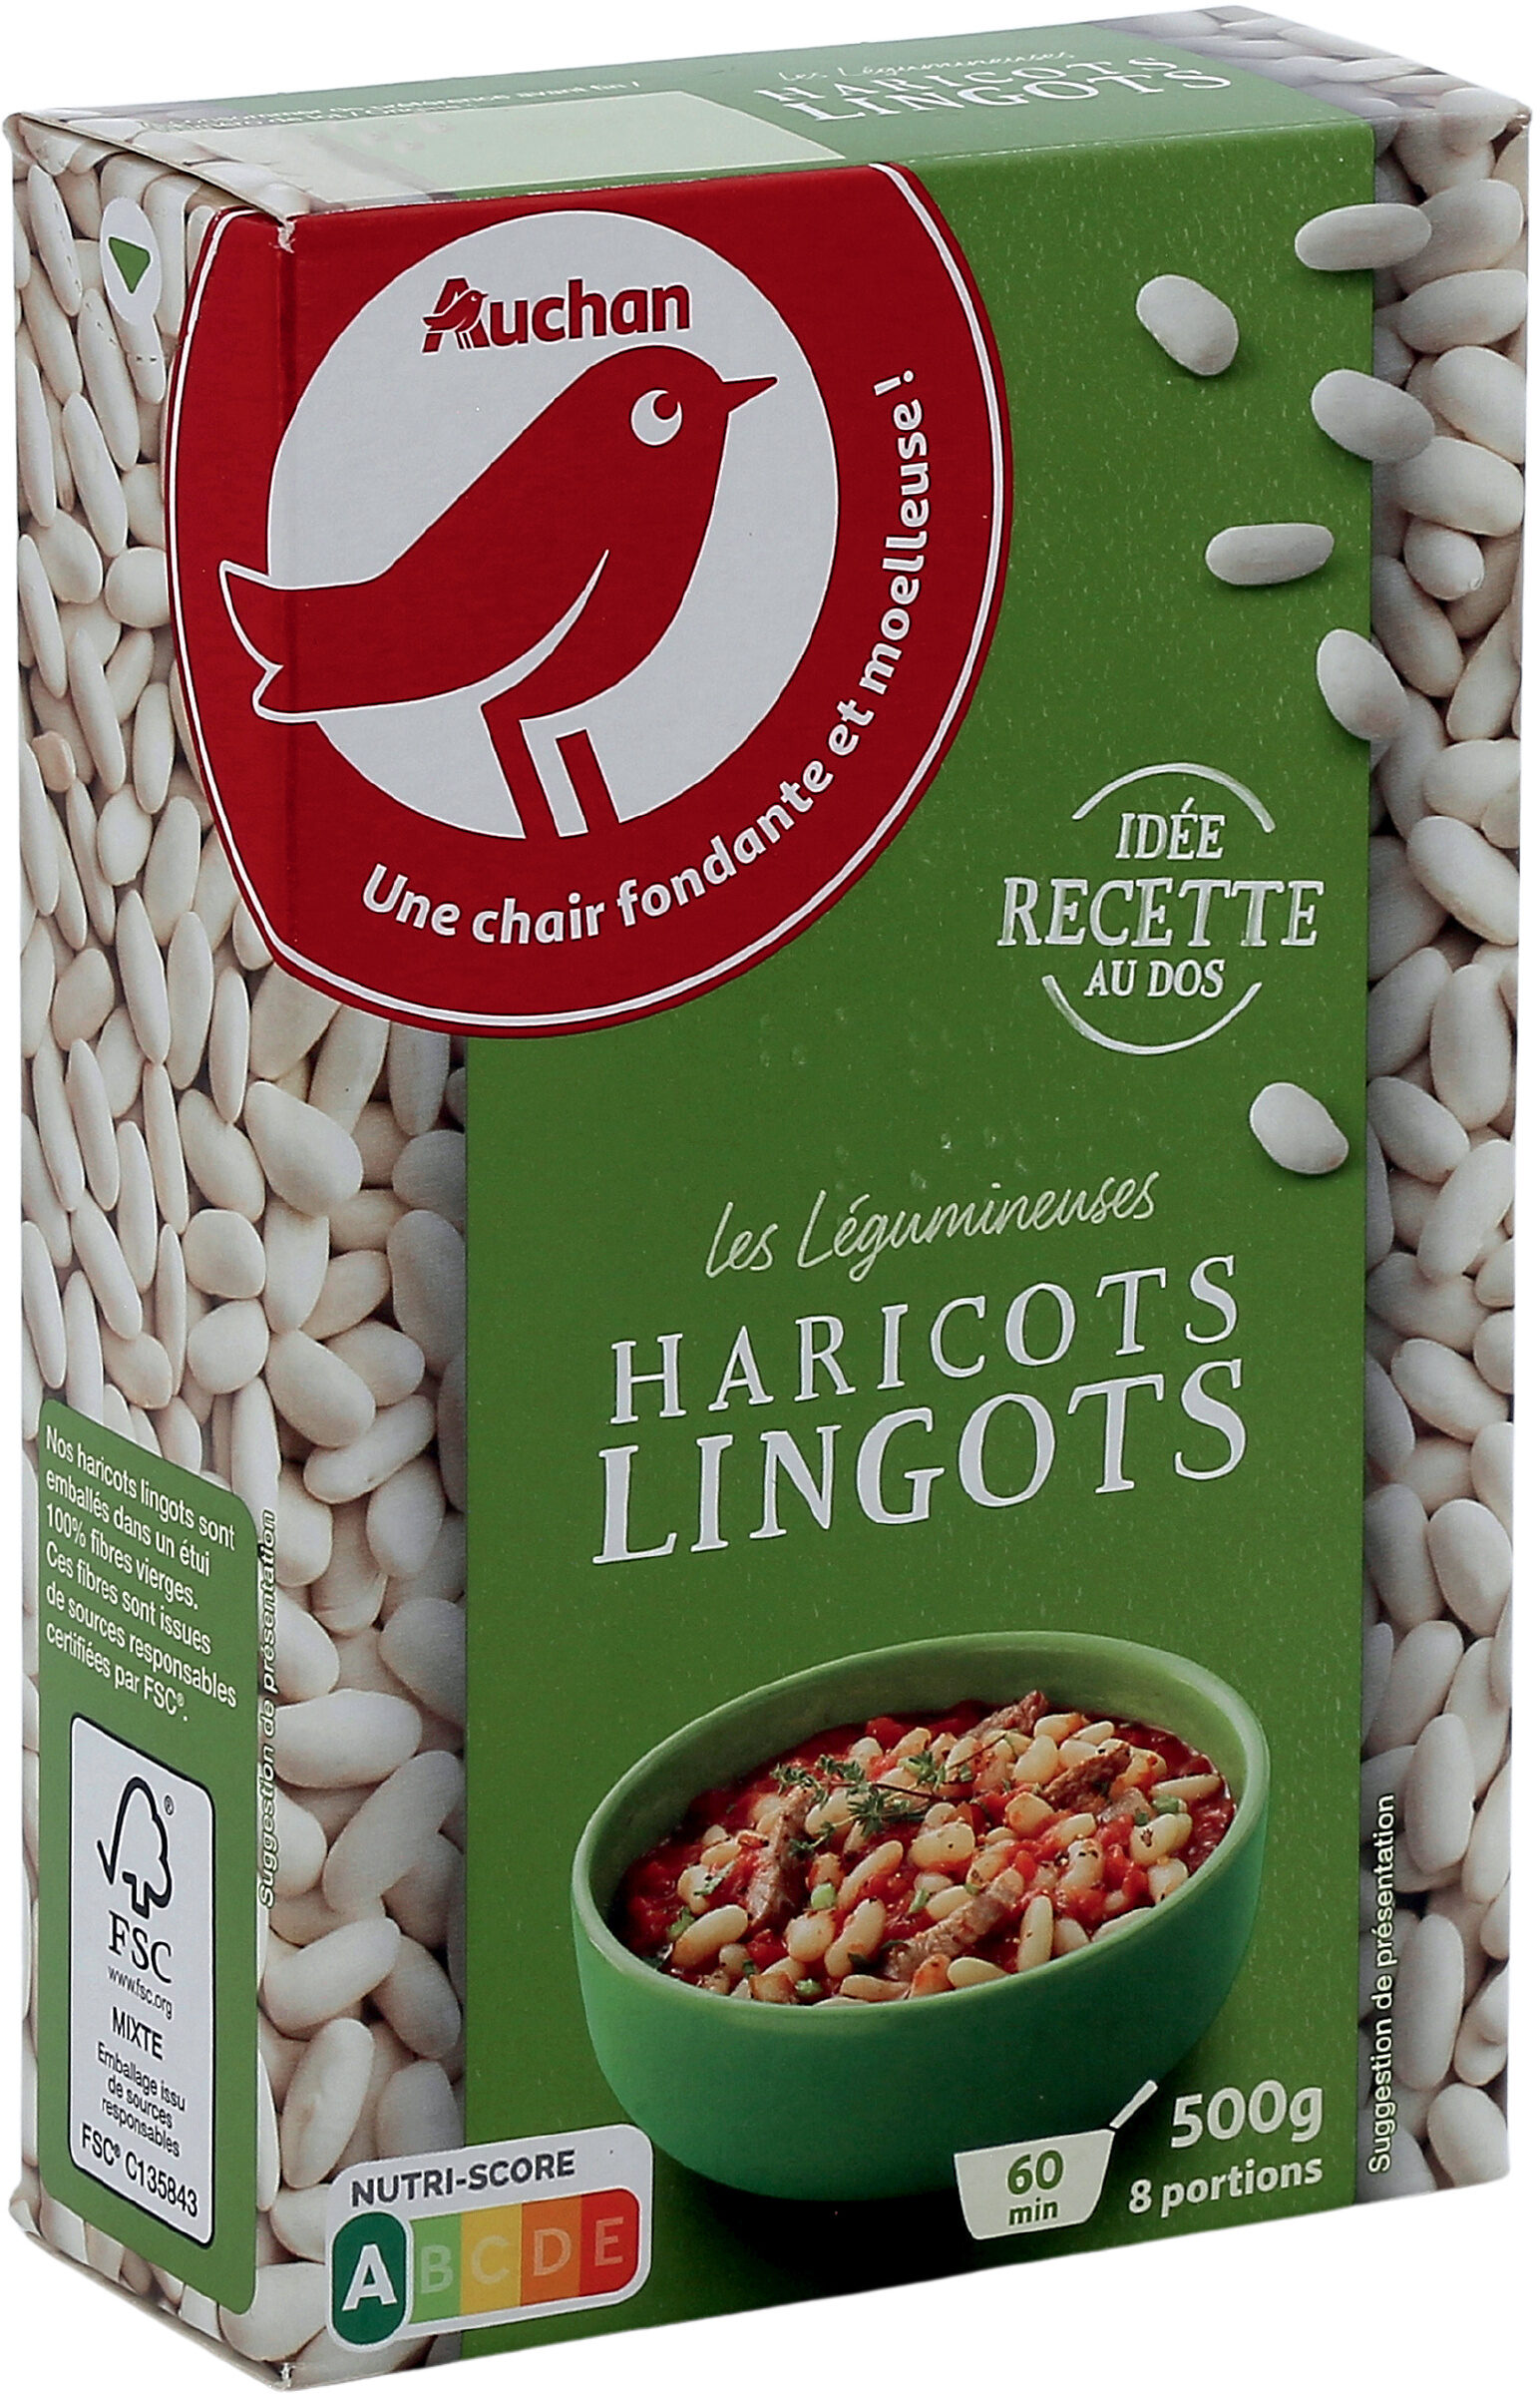 Haricots lingots - Product - fr